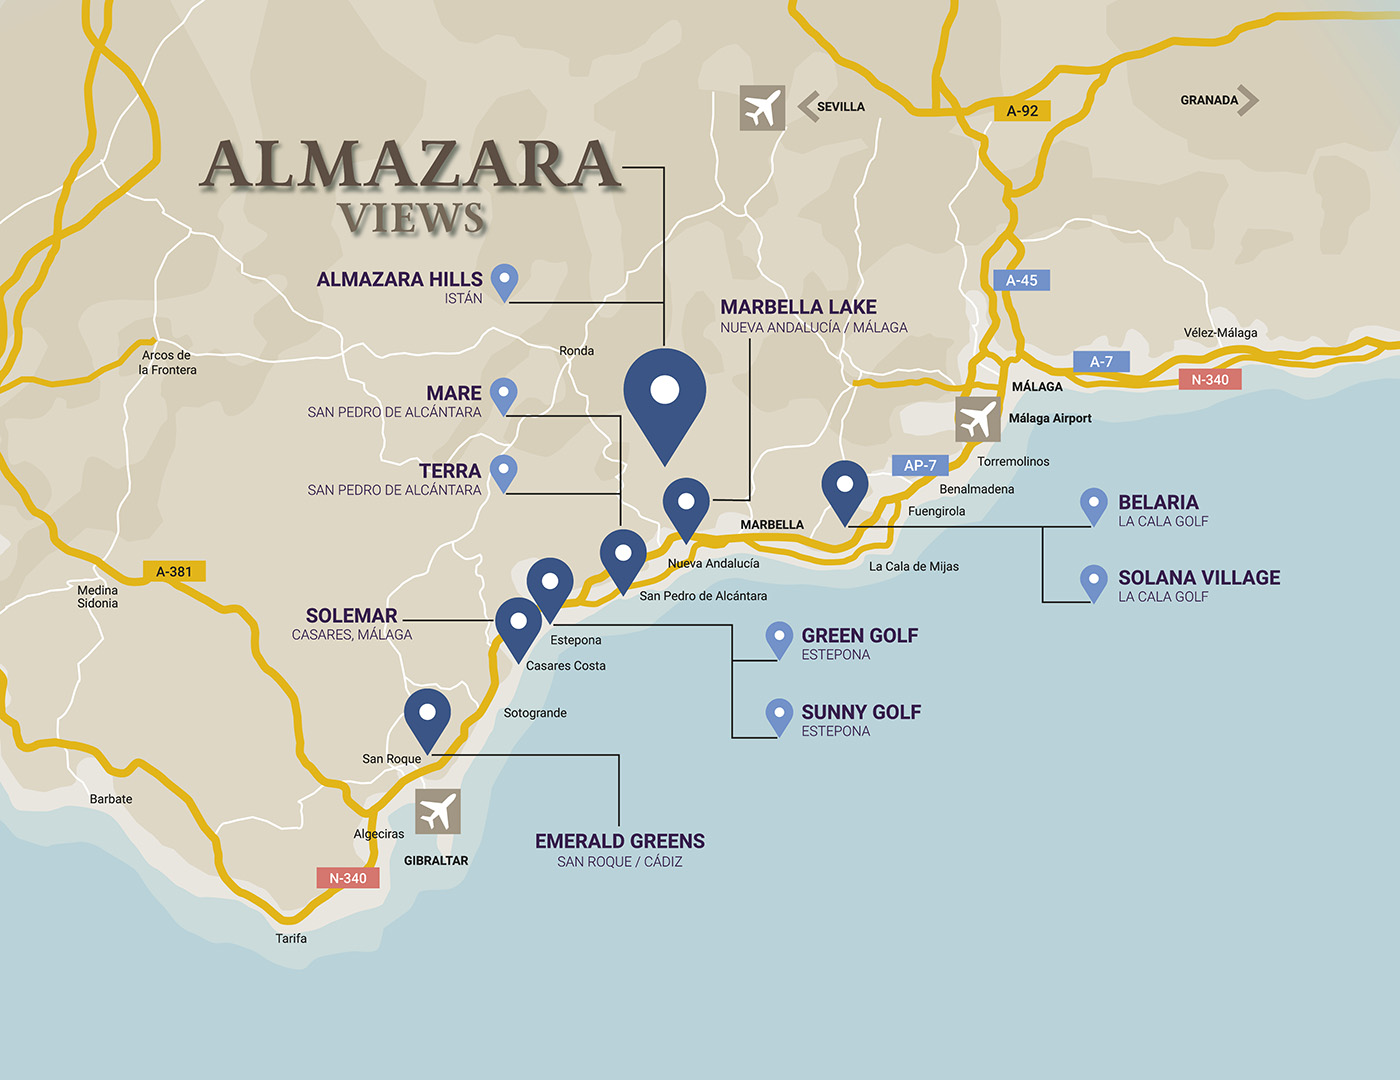 Mapa ALMAZARA VIEWS movil ages